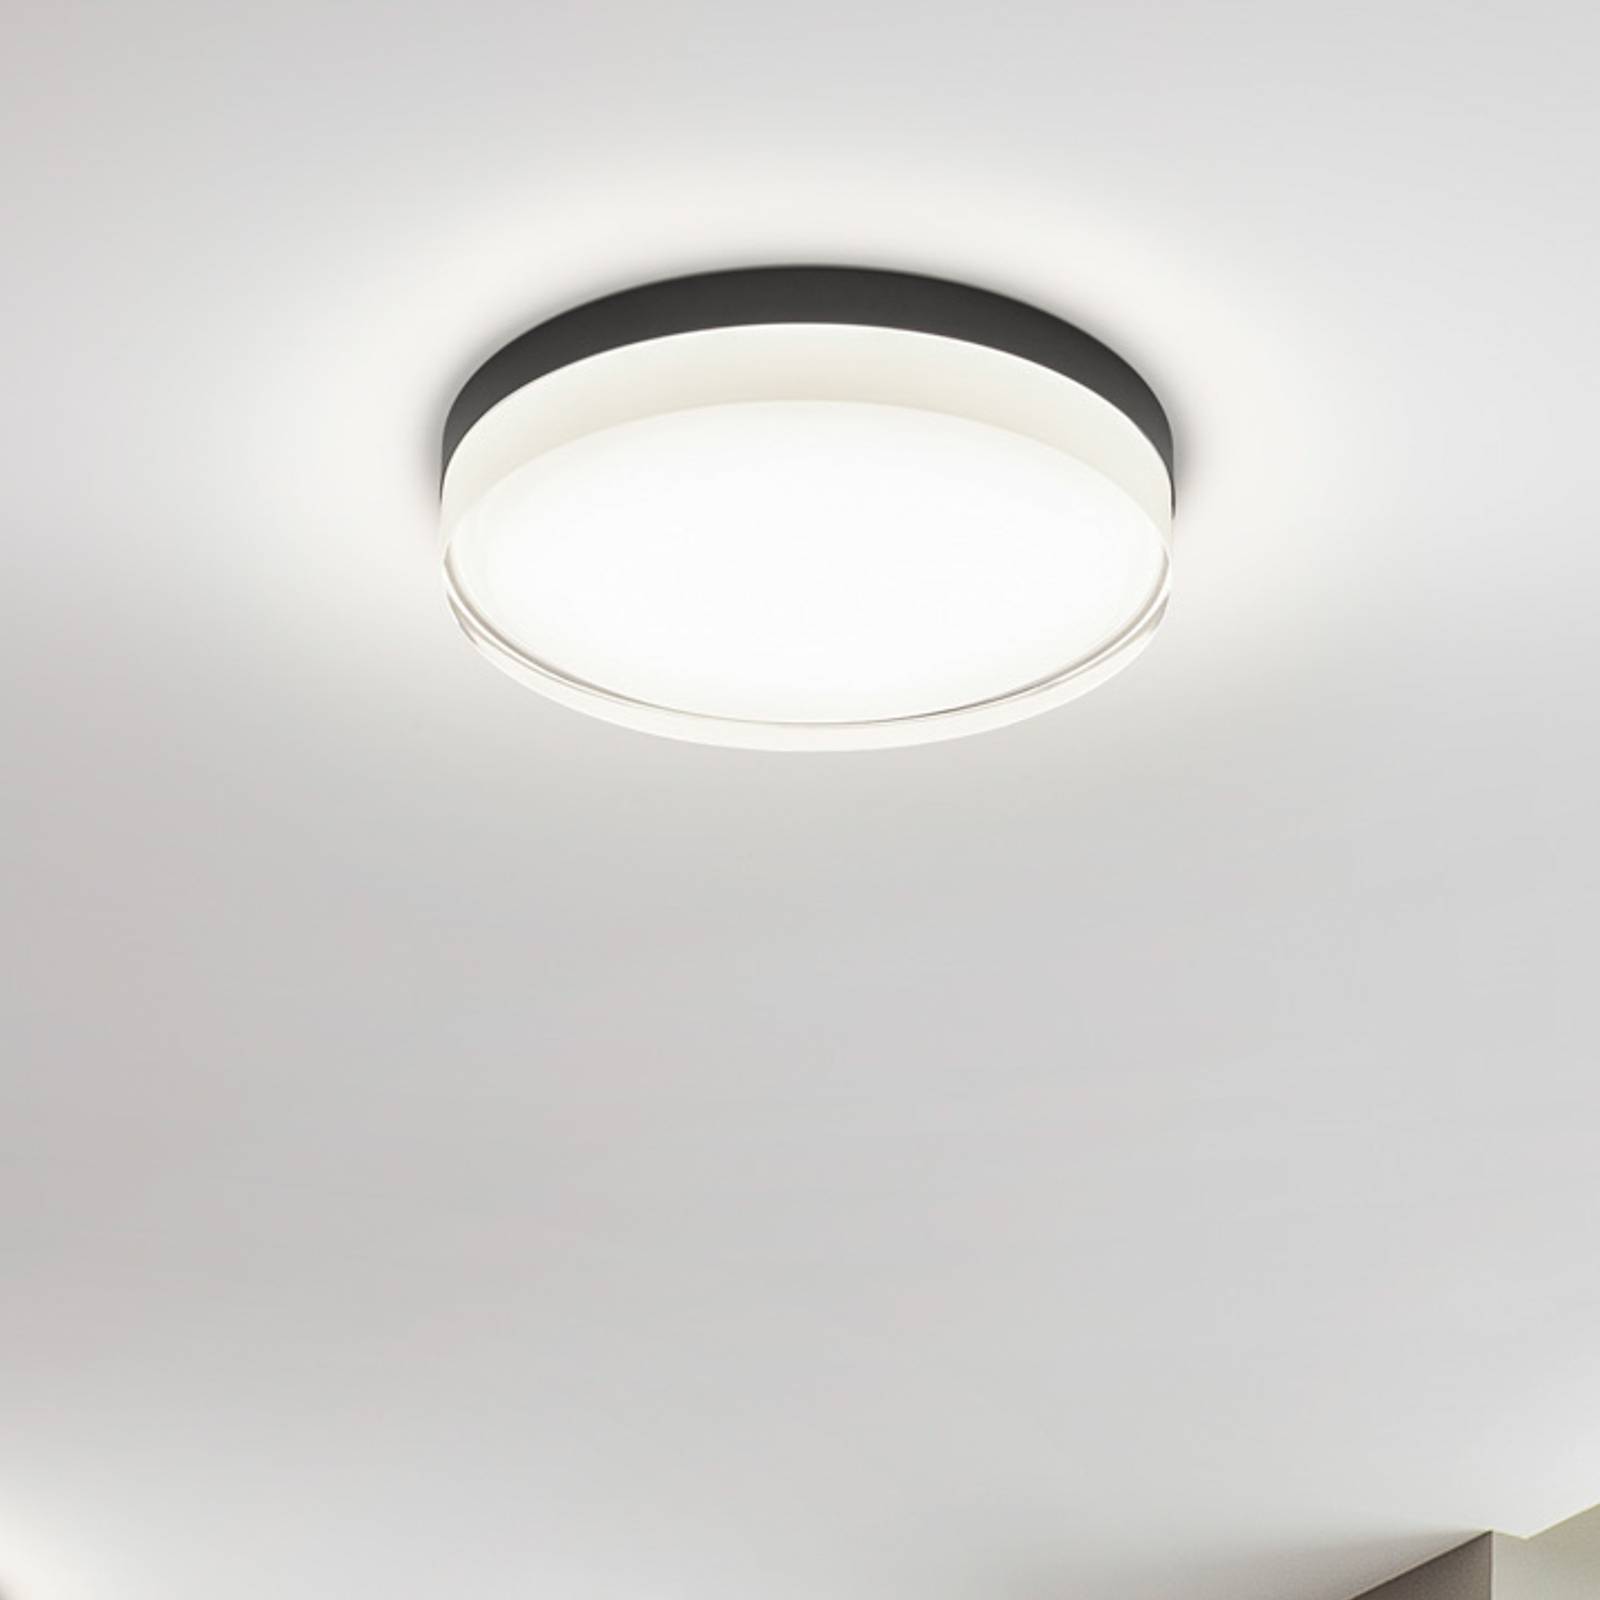 Helestra Tana LED plafondlamp, zwart, Ø 33 cm